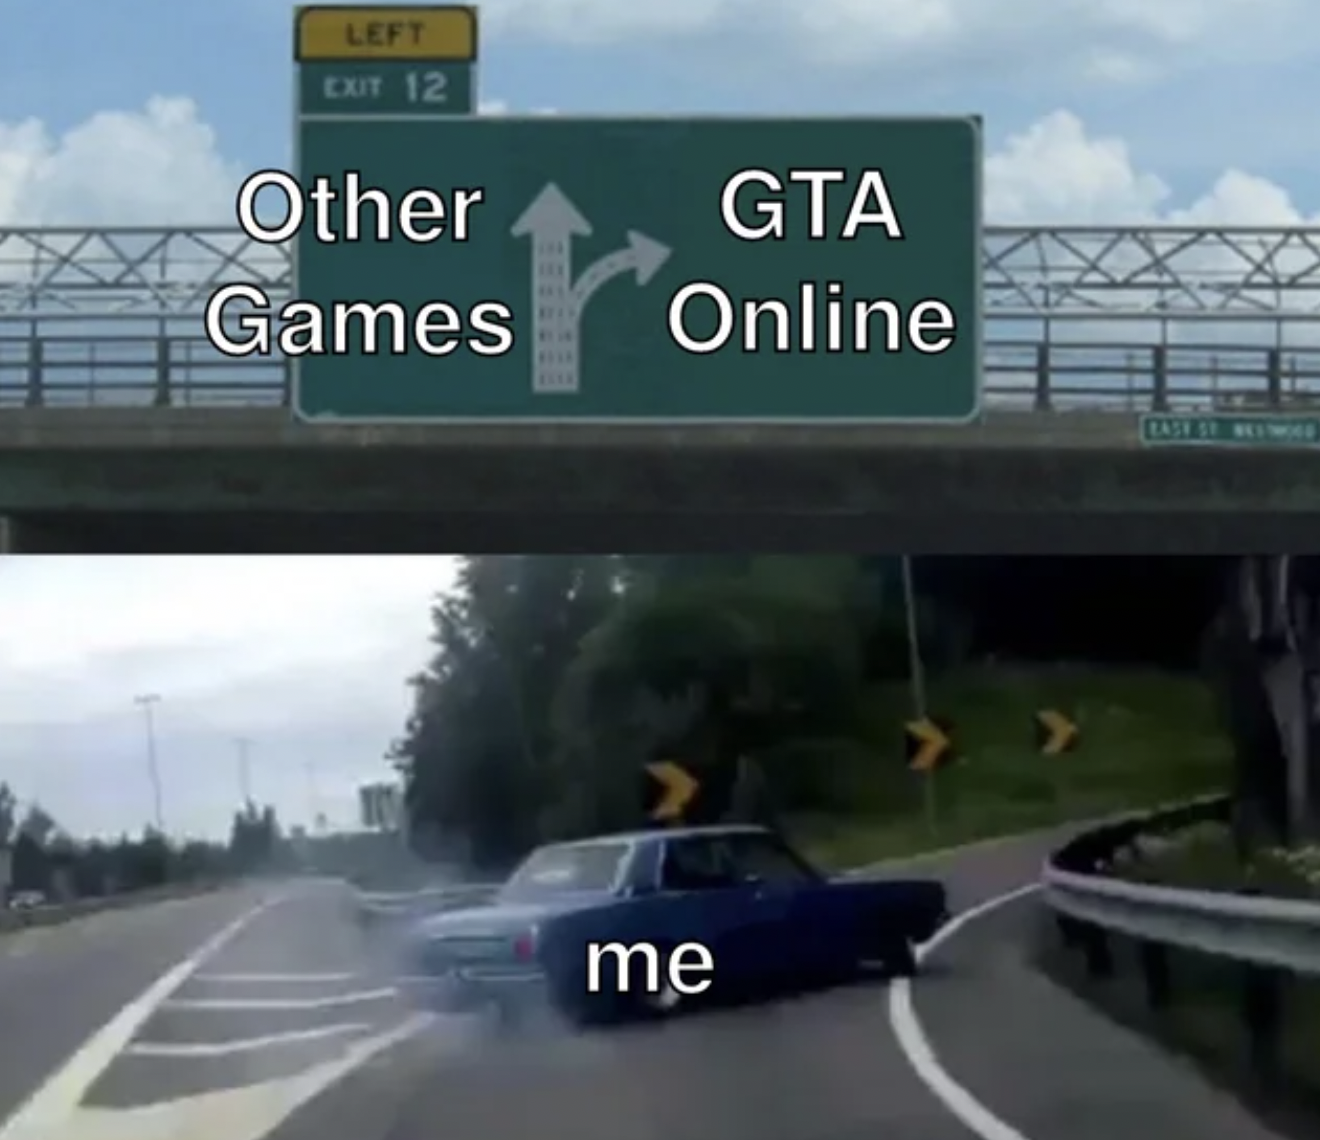 GTA V Memes - blank popular meme templates - Left Exit 12 Other Gta Games Online me